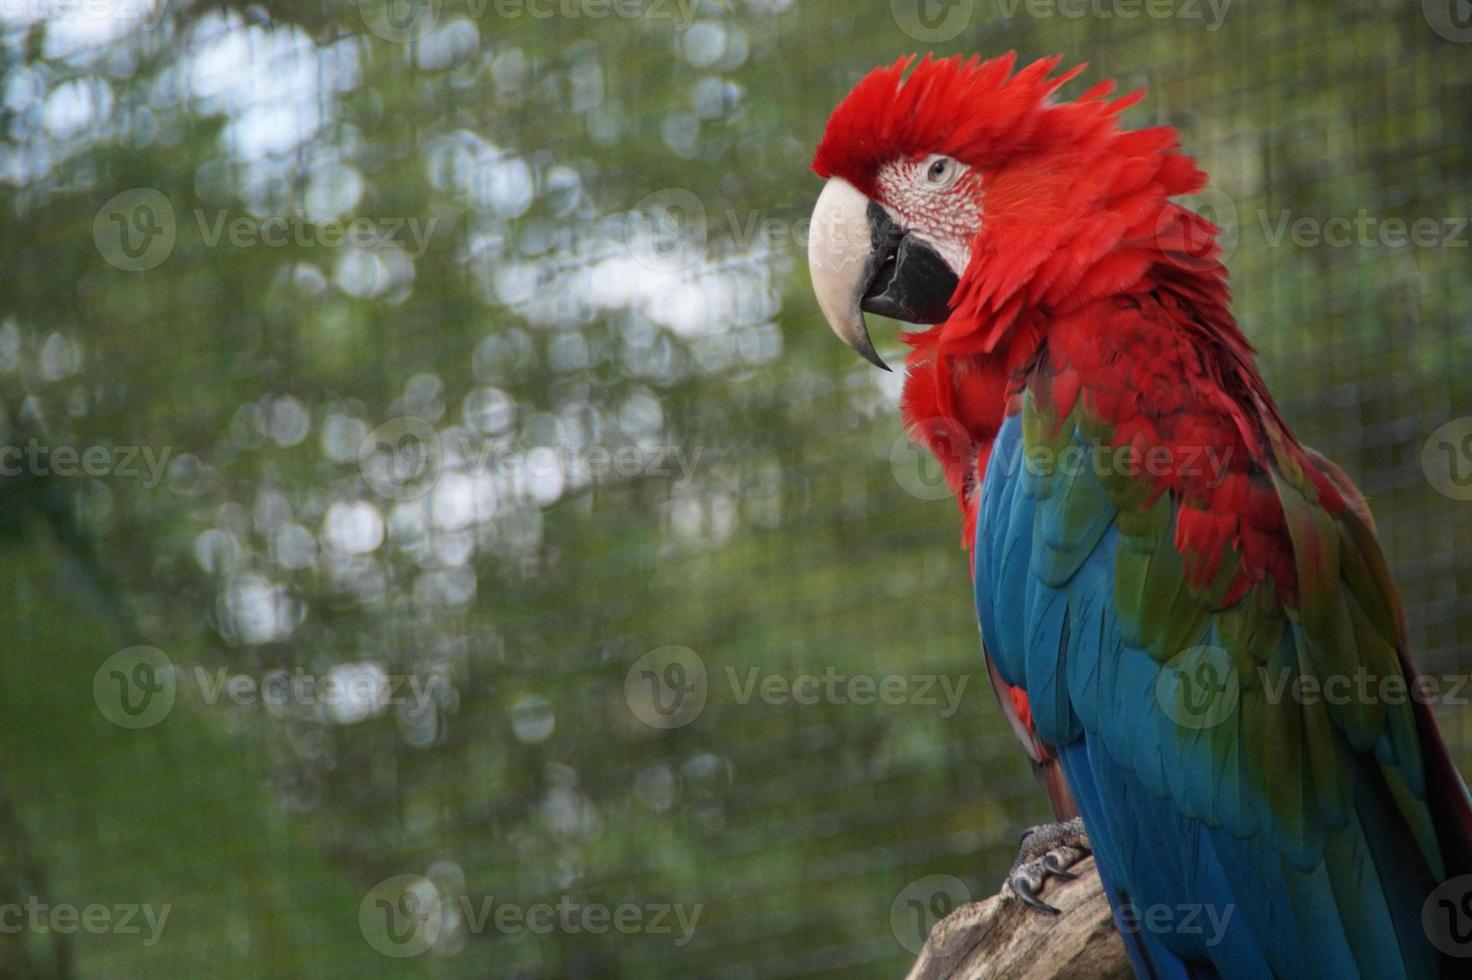 papagaio vermelho foto